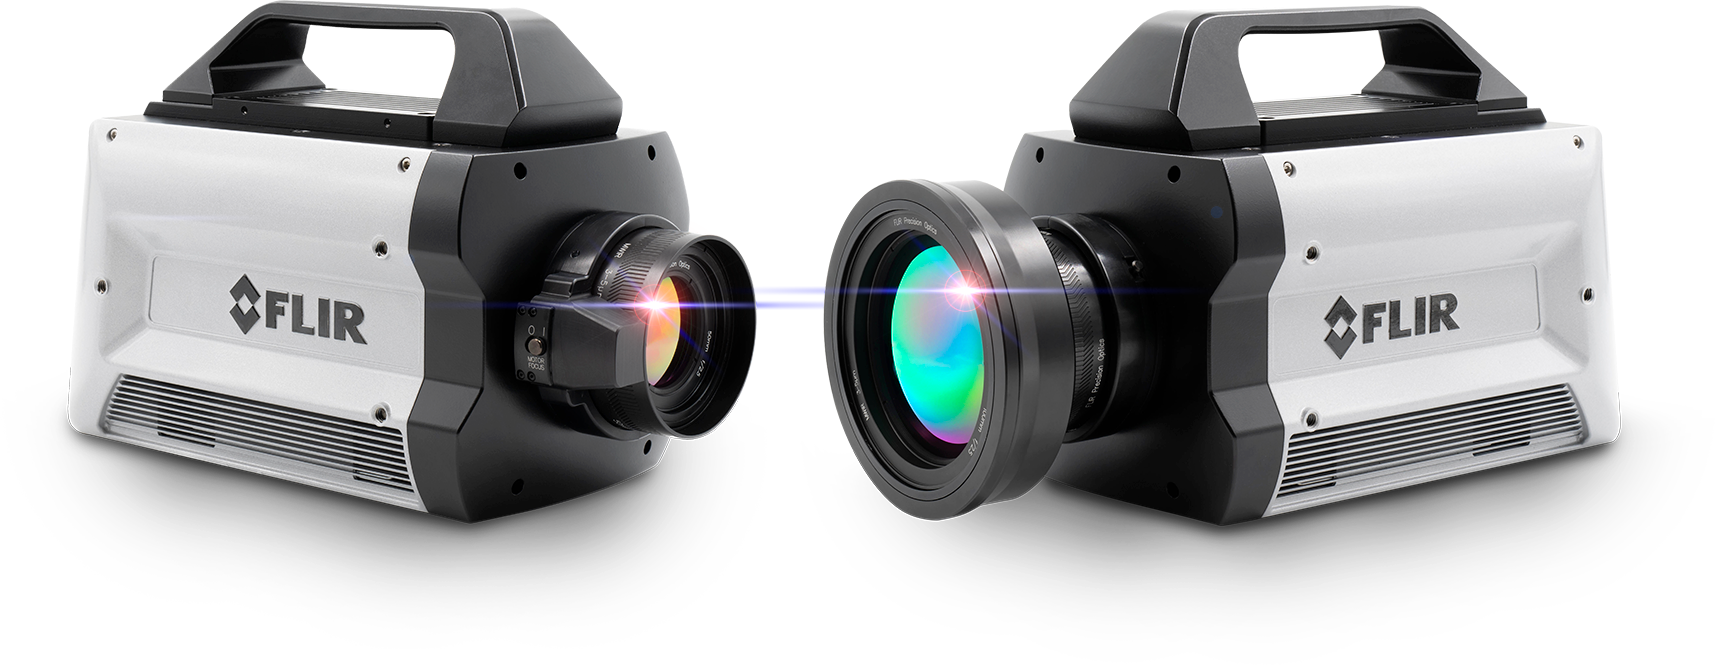 FLIR Next X-Series X6980 and X8580 infrared science-grade video cameras.